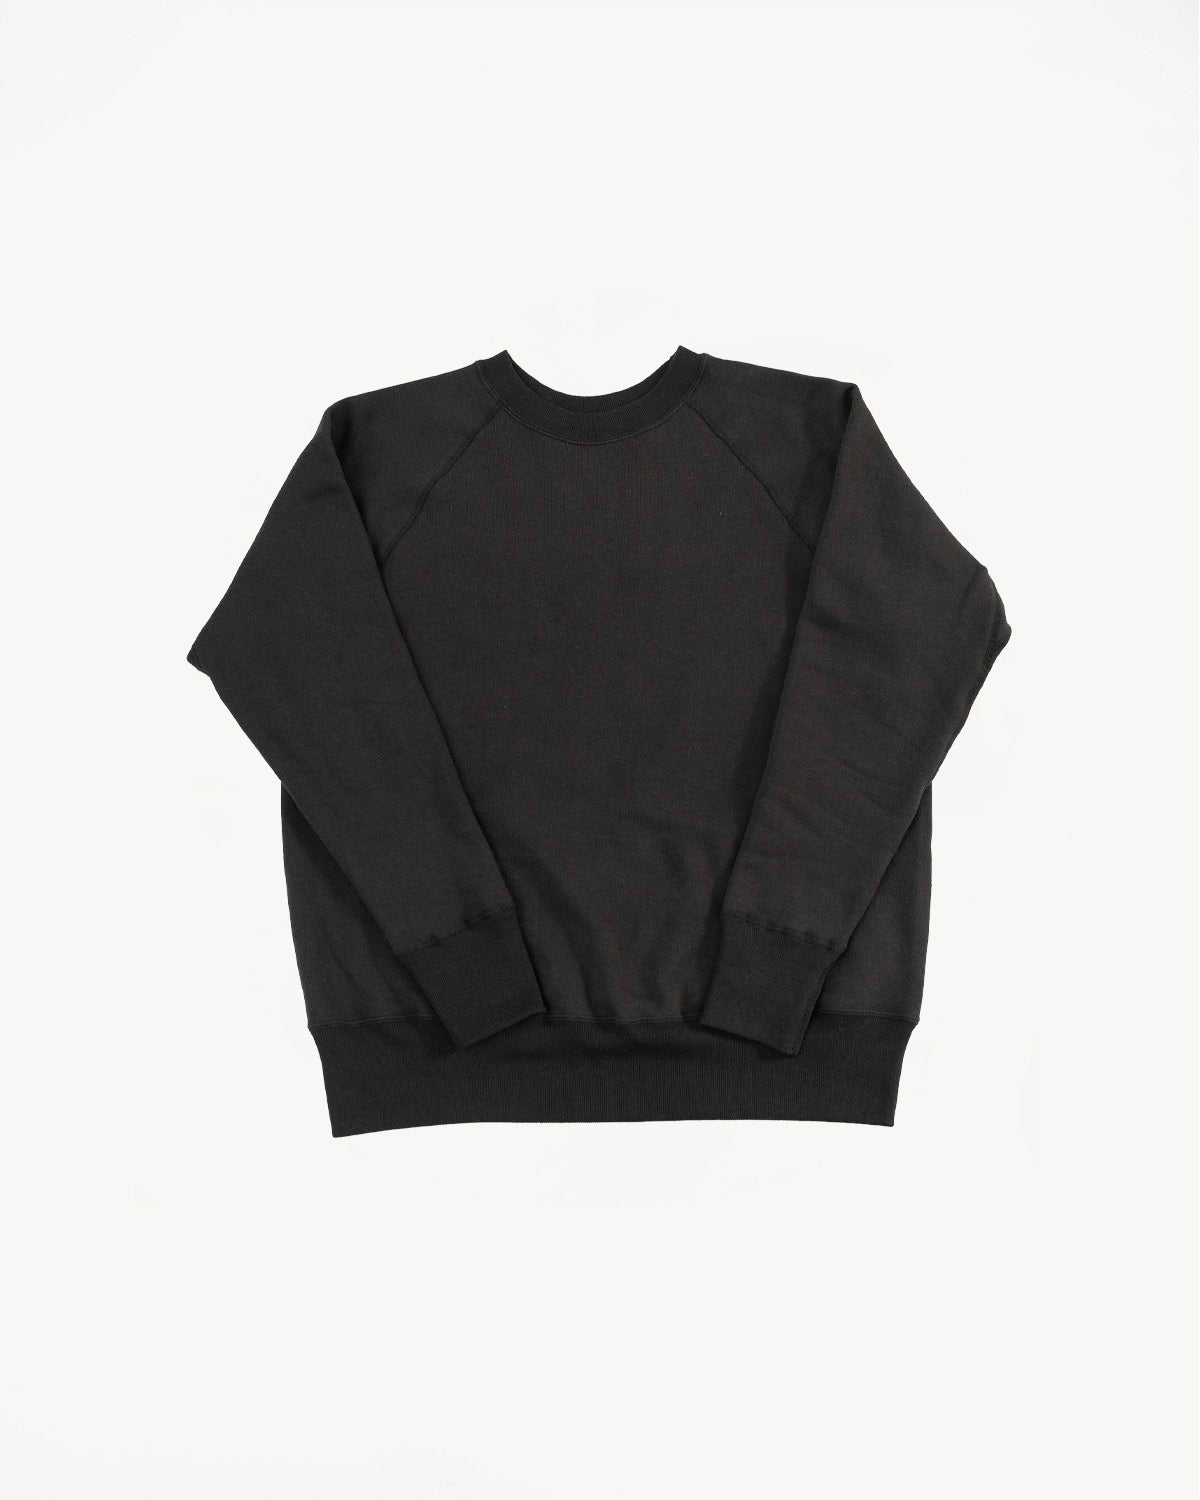 Lot 409 - Plain Crewneck Sweatshirt - Black